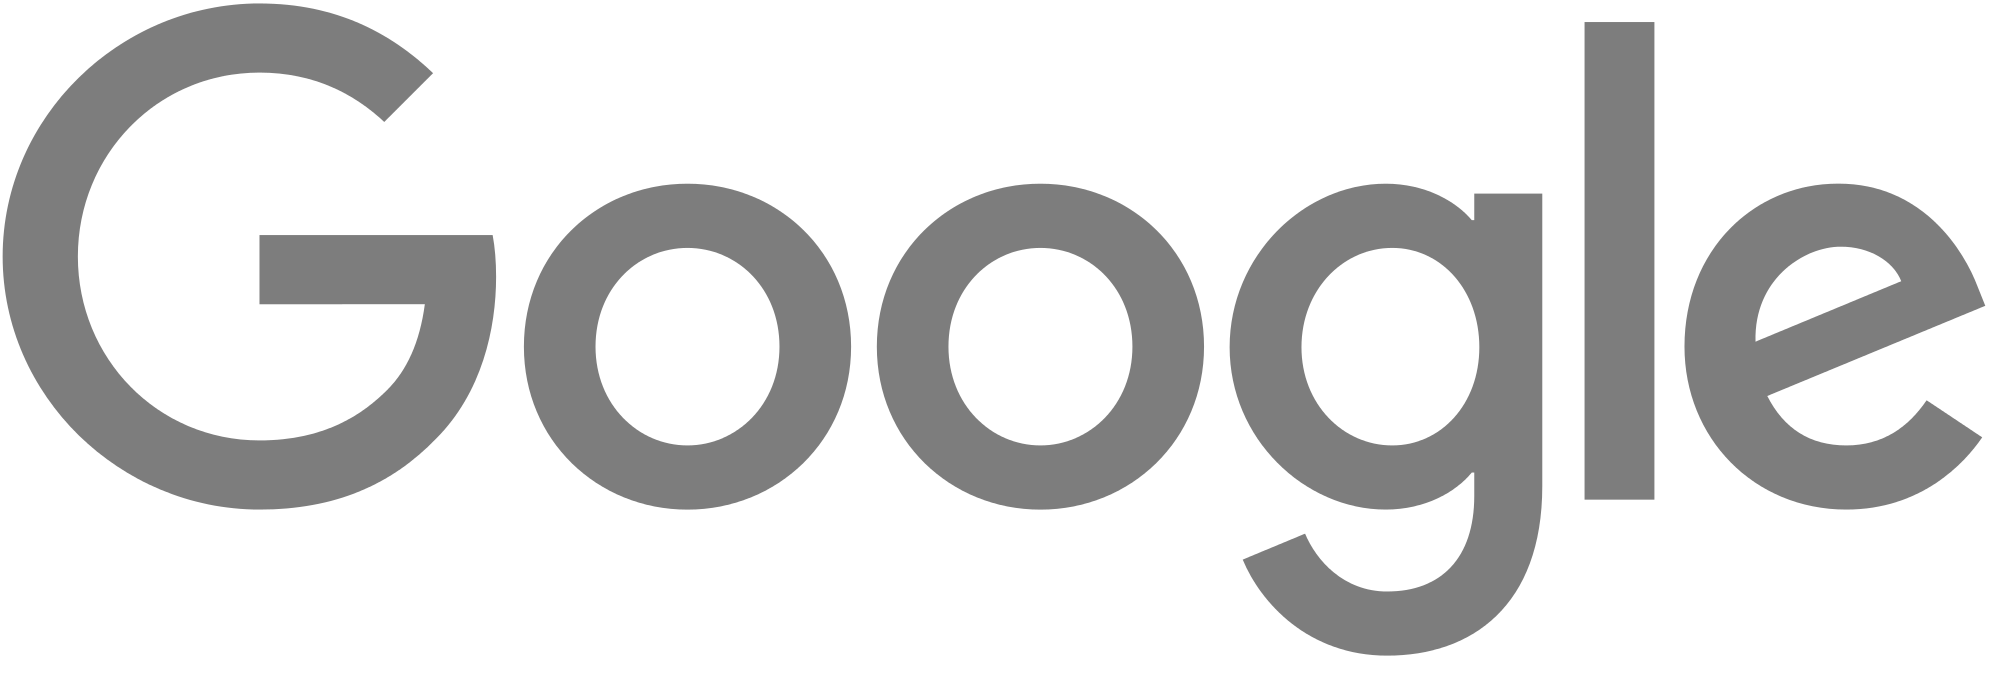 google-logo-png-transparent-background-large-new_gray.png